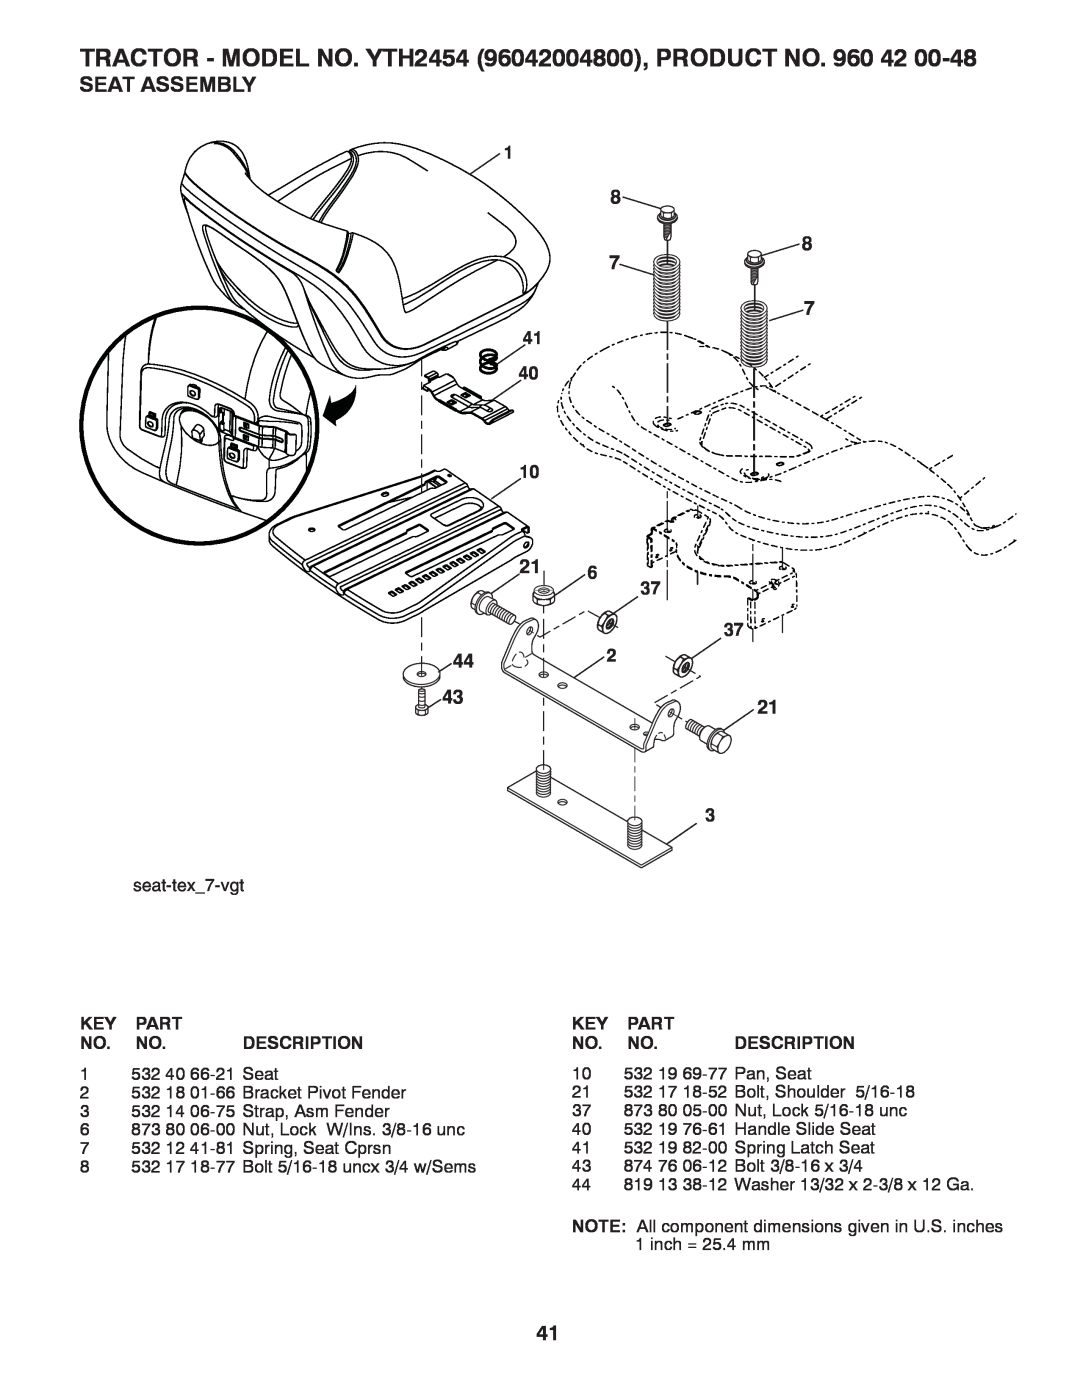 Husqvarna YTH2454 owner manual Seat Assembly, 41 40 10 216 37 37 2, Part, Description 